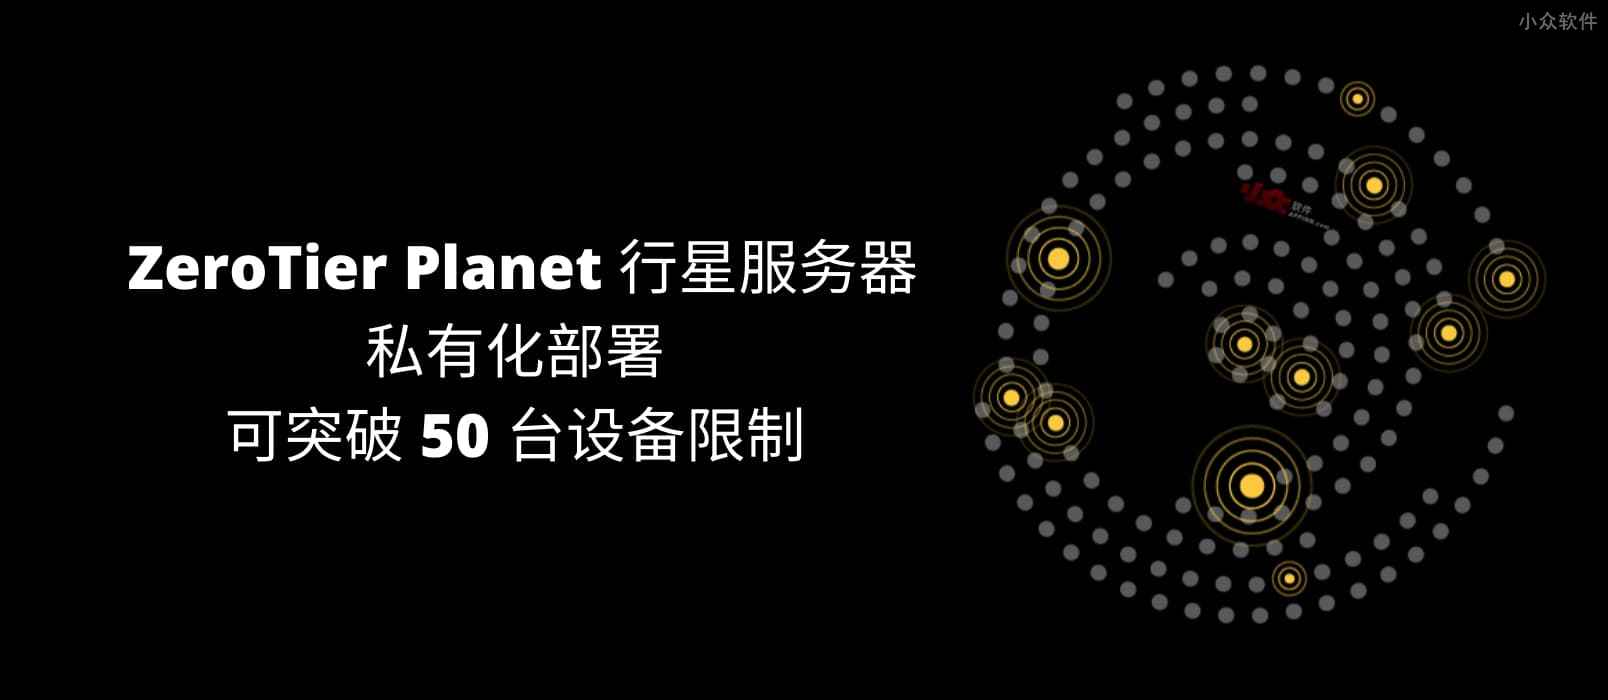 ZeroTier Planet 行星服务器，一键私有部署，可突破 50 台设备限制